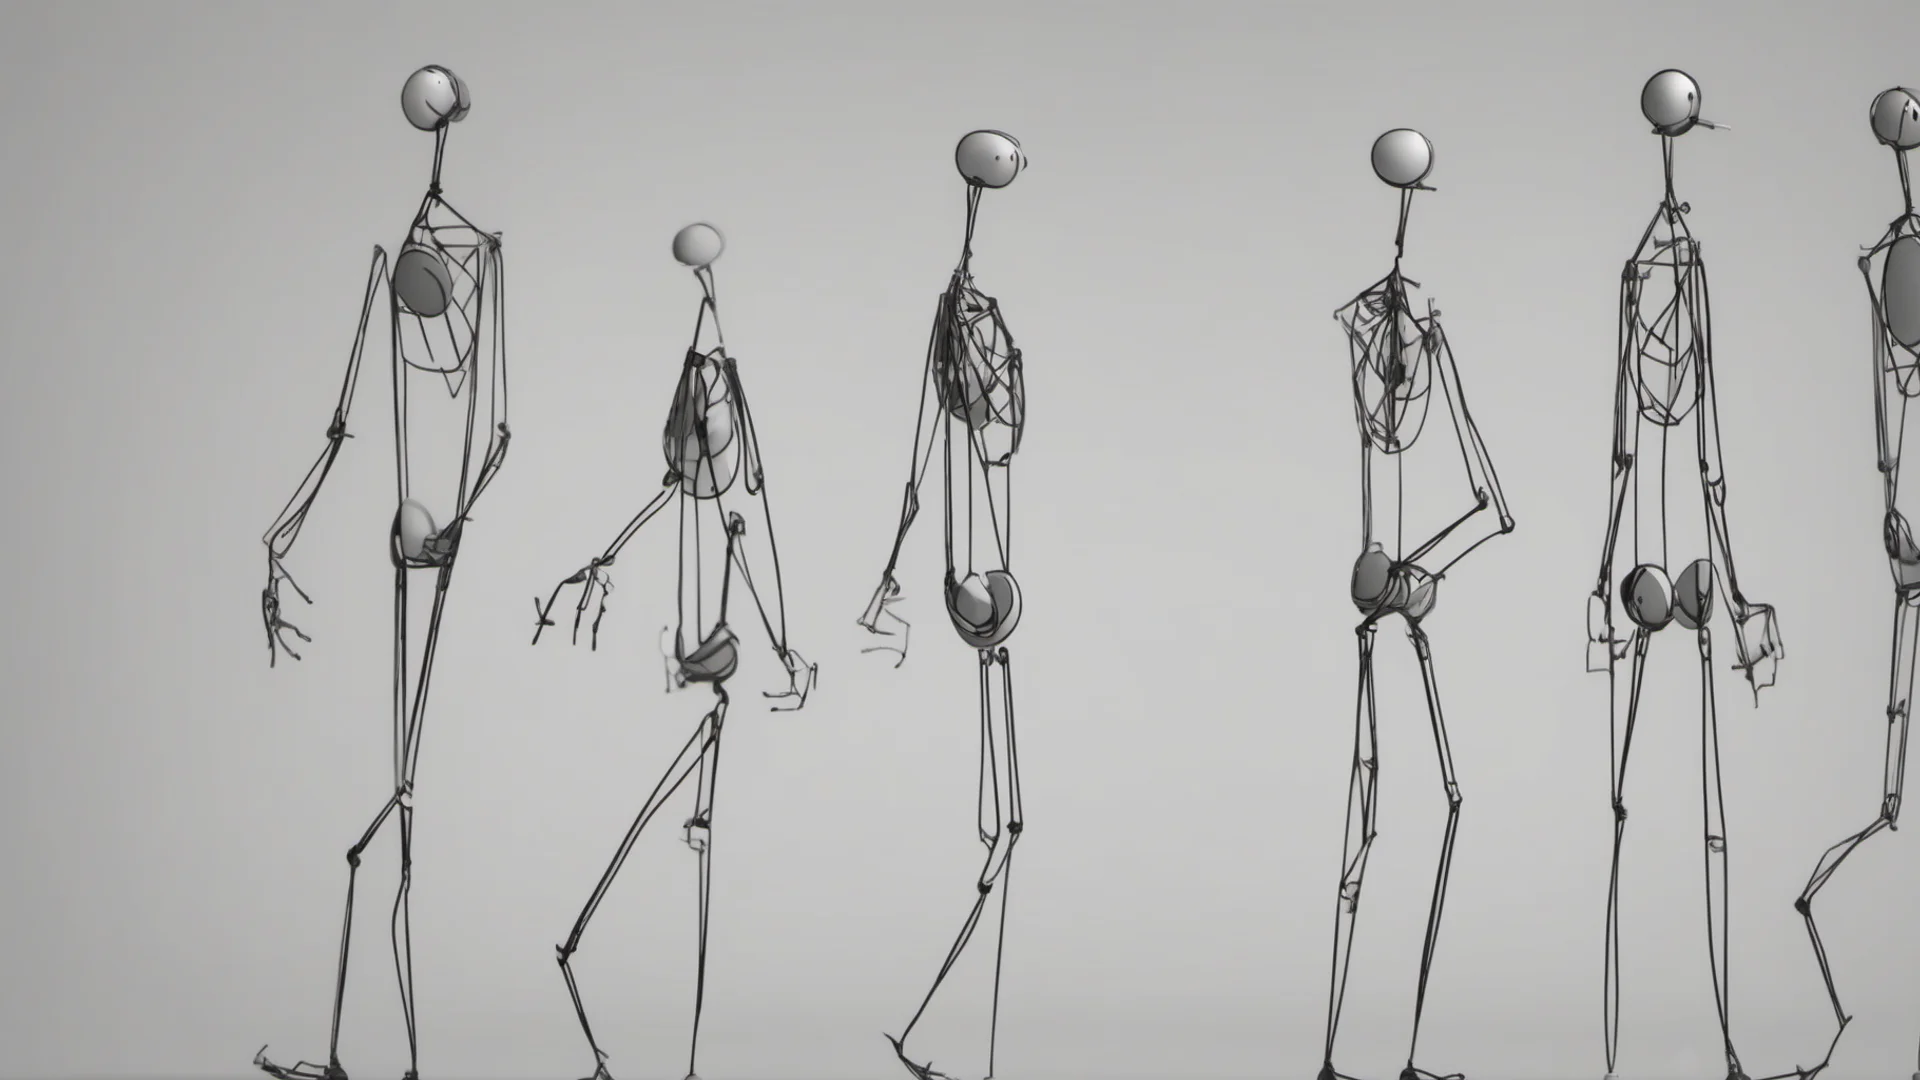 stickman walking frame by frame animation wide